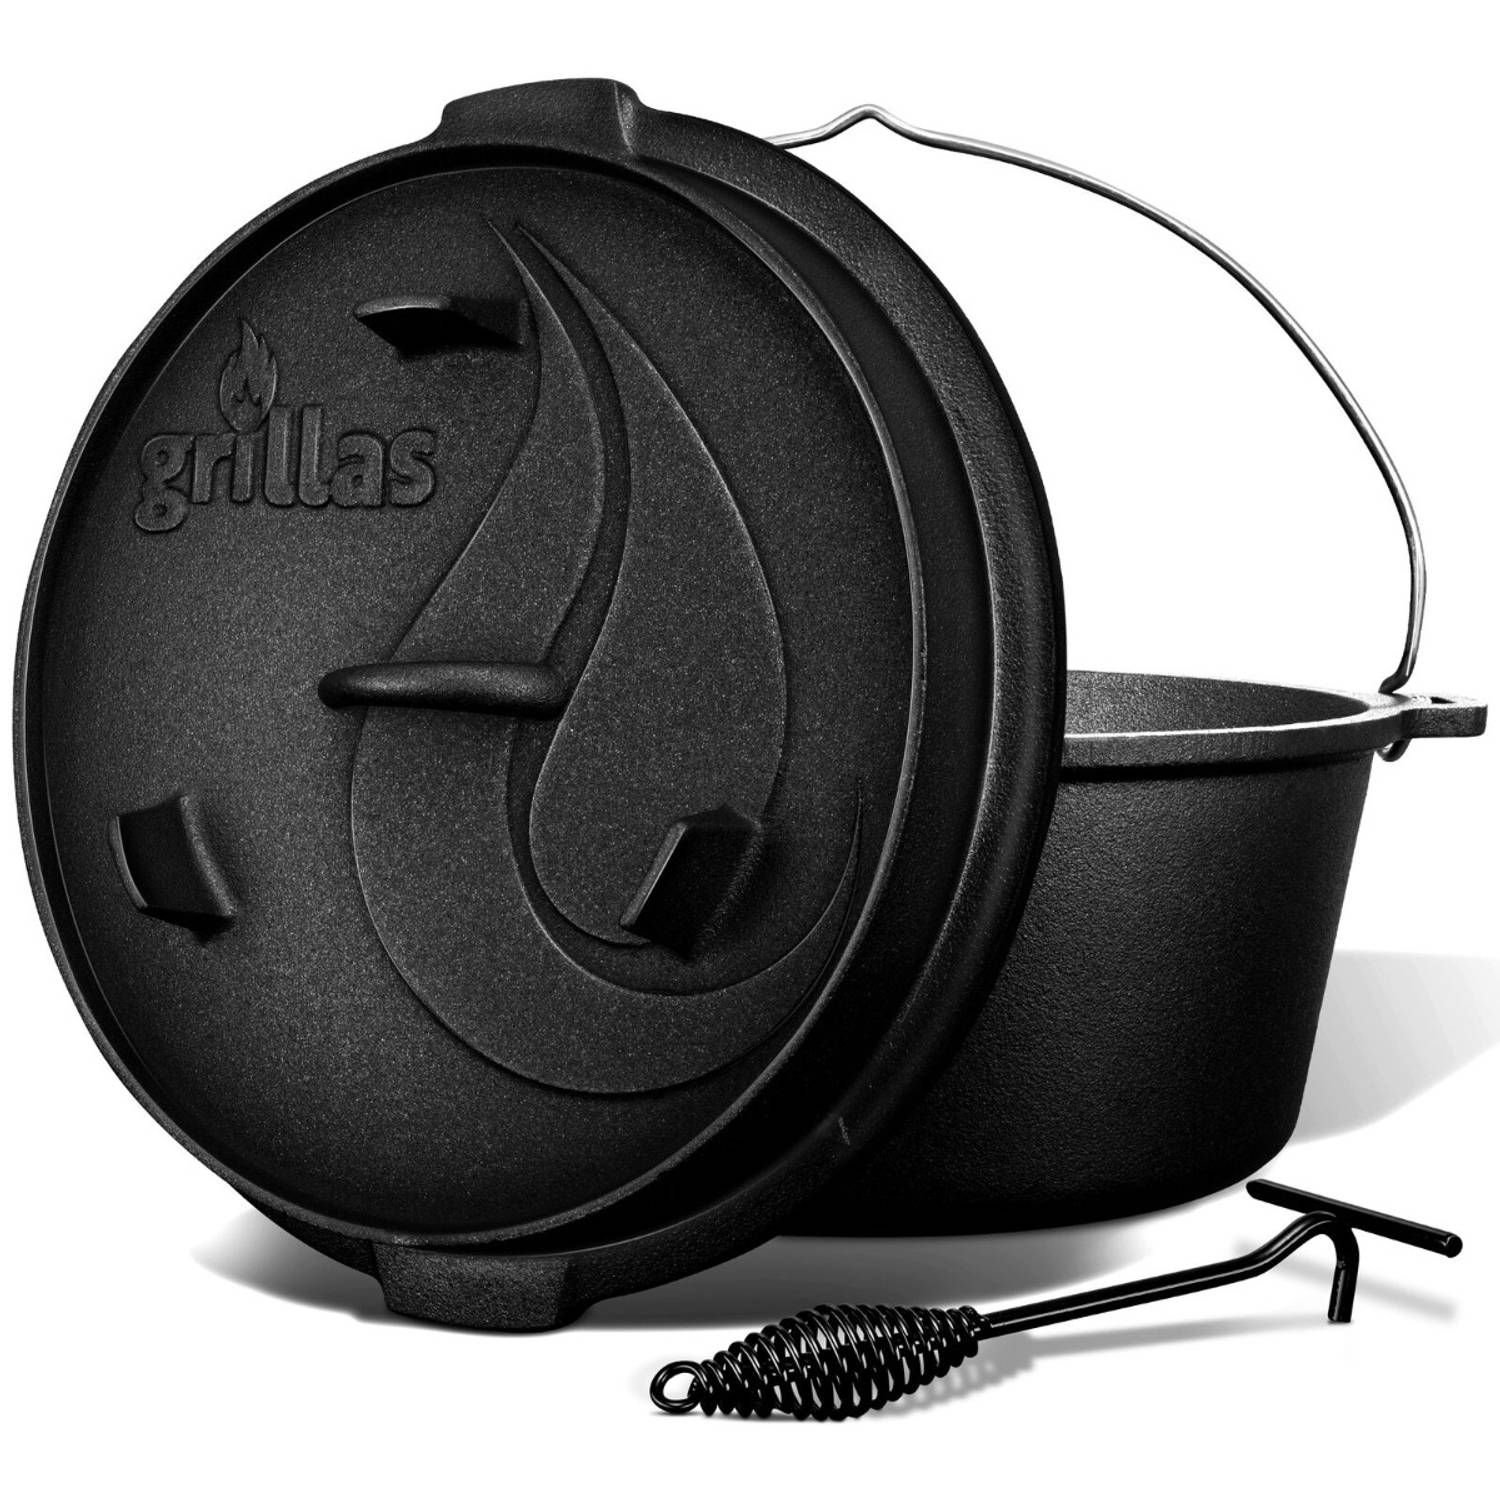 Grillas- Dutch Oven, 4.2L, BBQ pan, gietijzer G